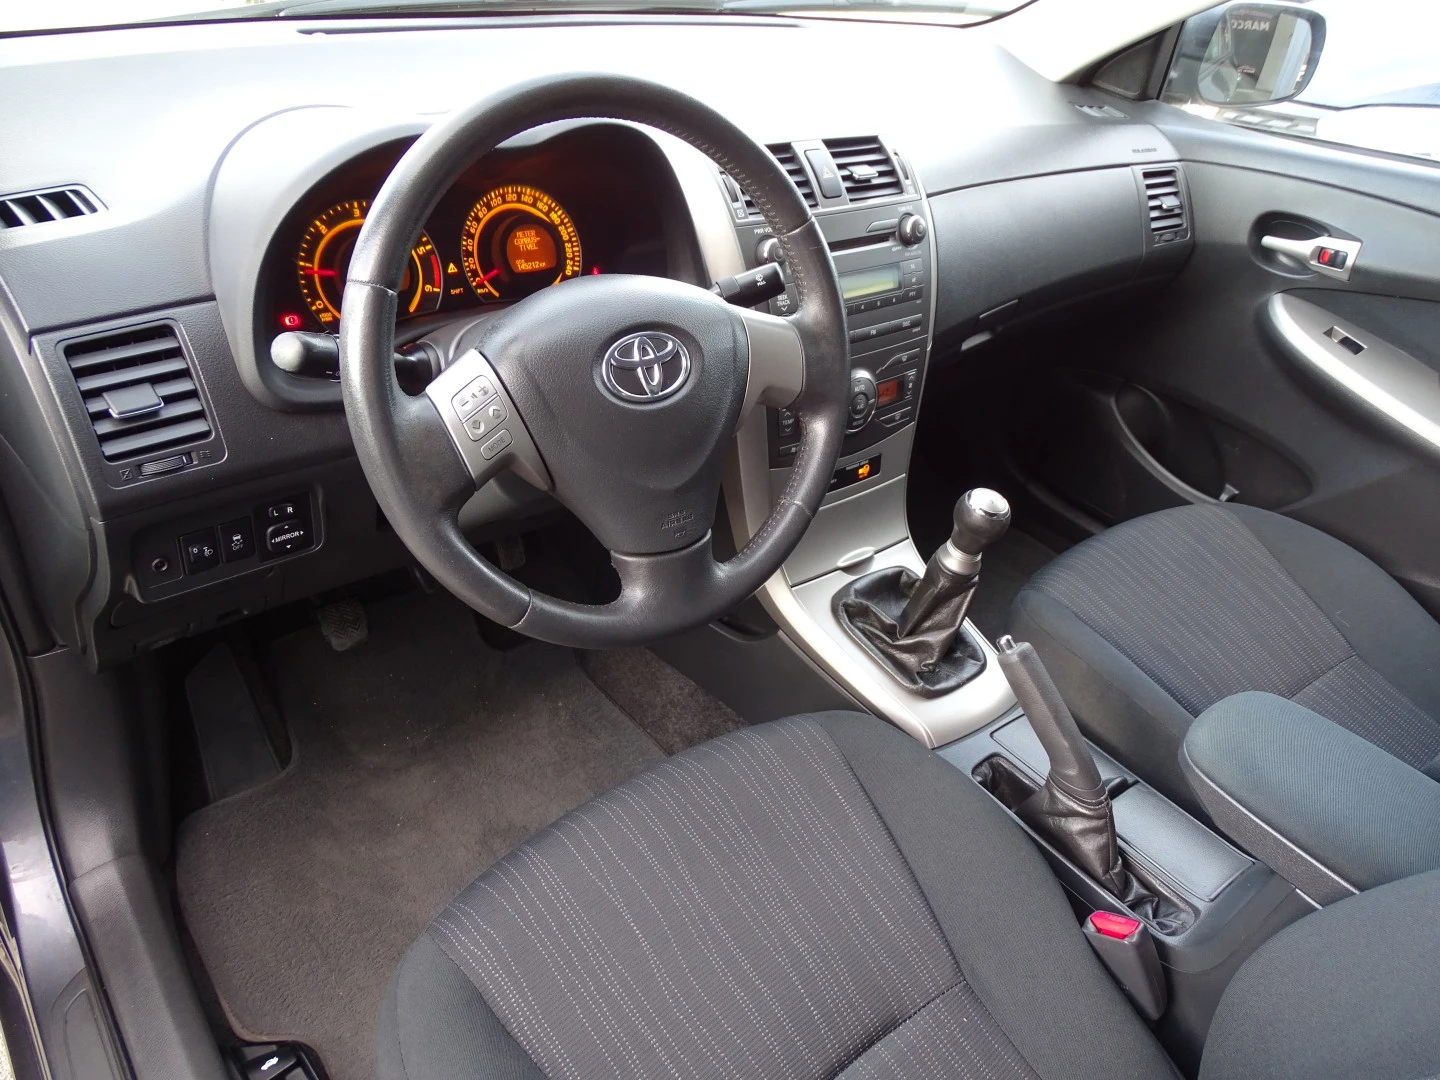 Toyota Corolla 1.4 D-4D Premium Pack